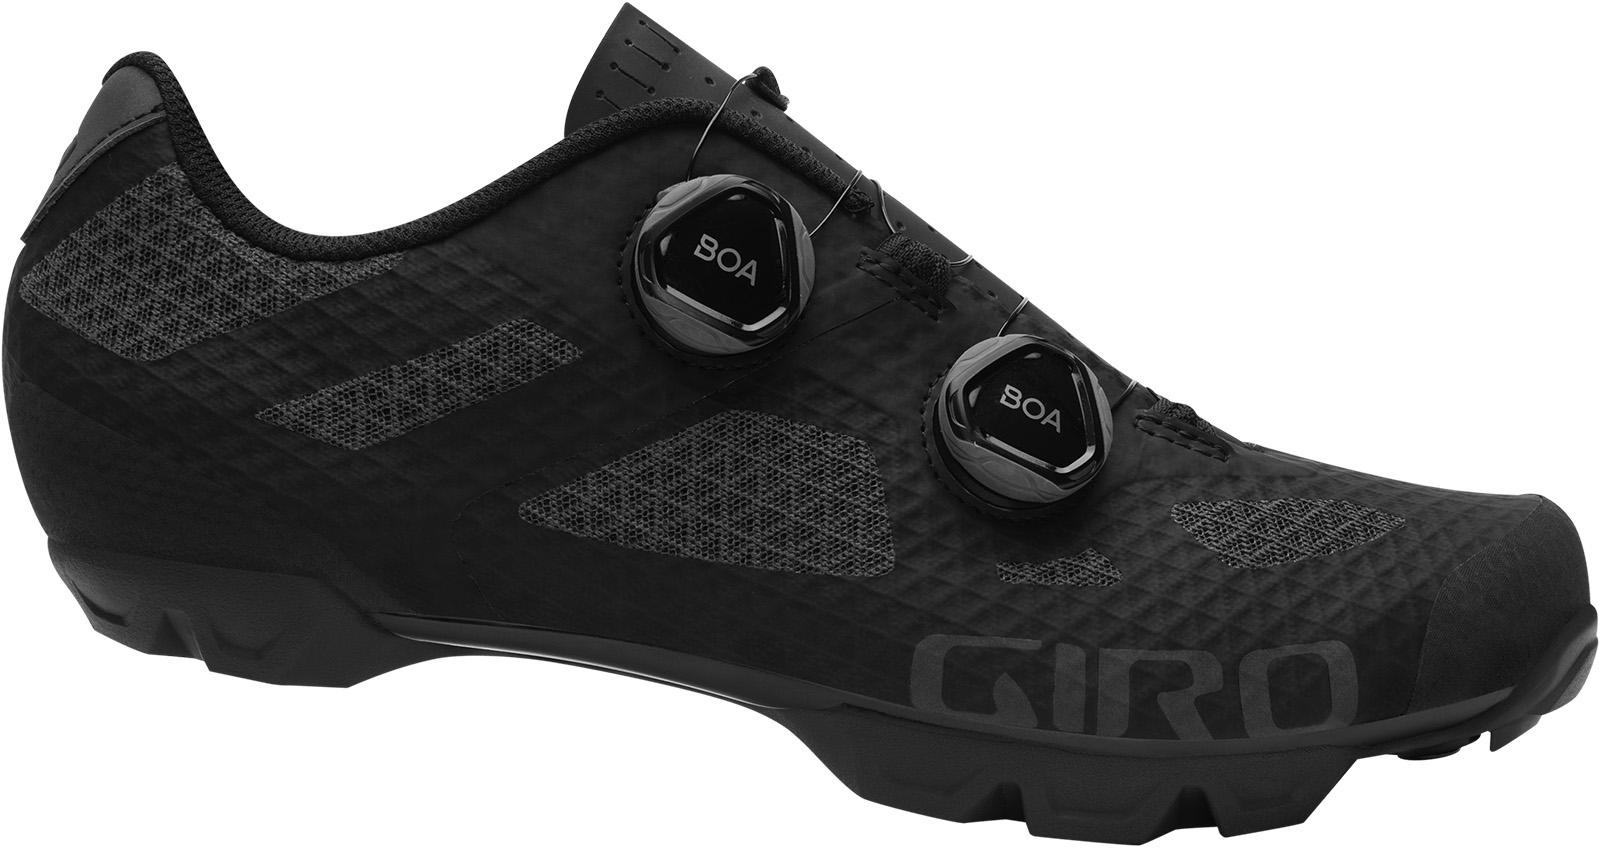 Giro Womens Sector Mtb Cycling Shoes - Black/grey